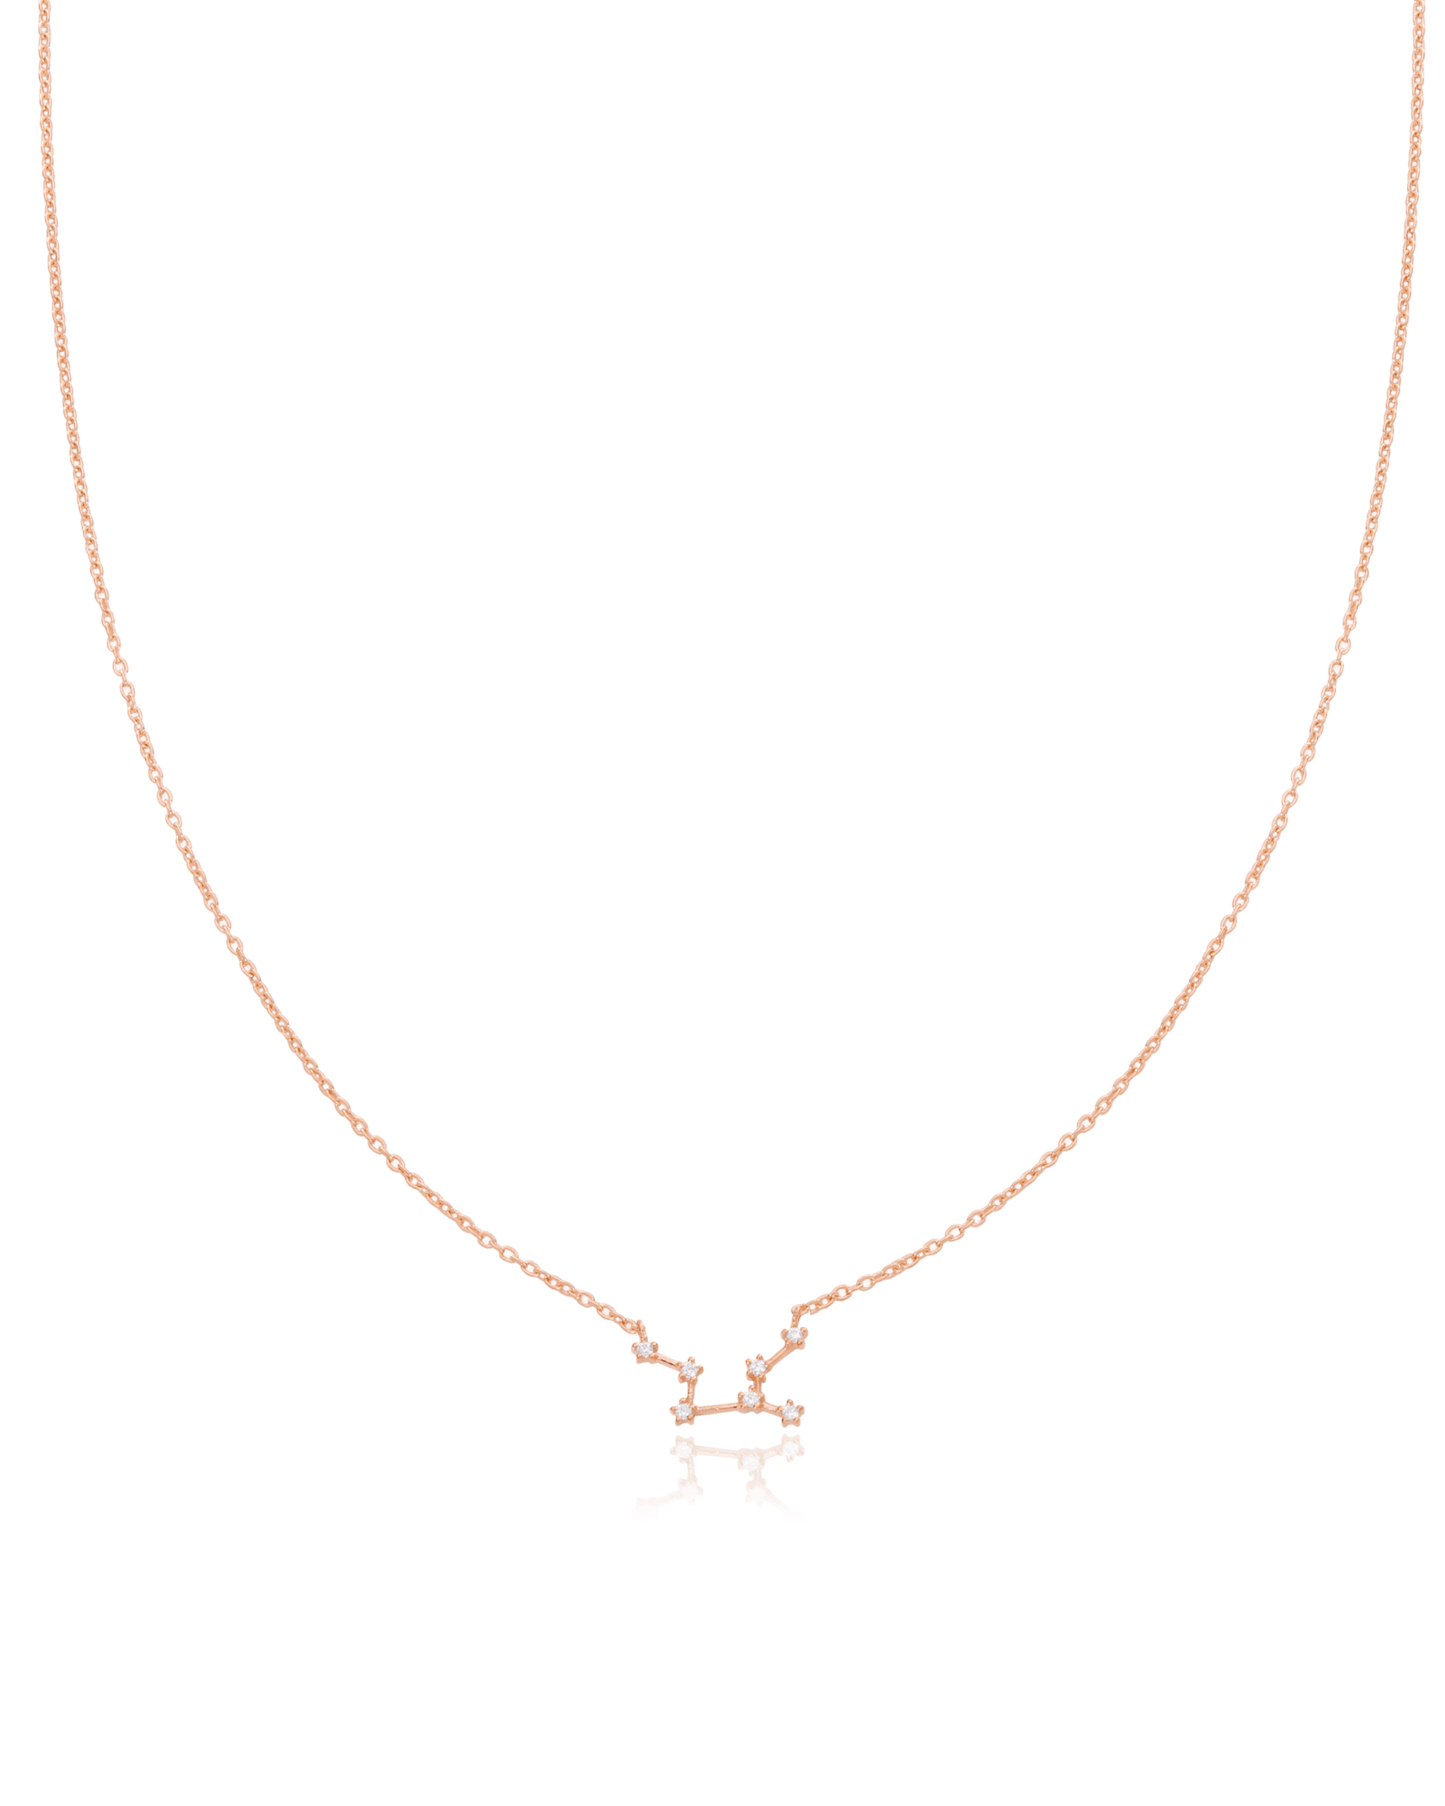 Virgo Constellation Necklace - 18K Gold Vermeil Necklaces magal-dev 